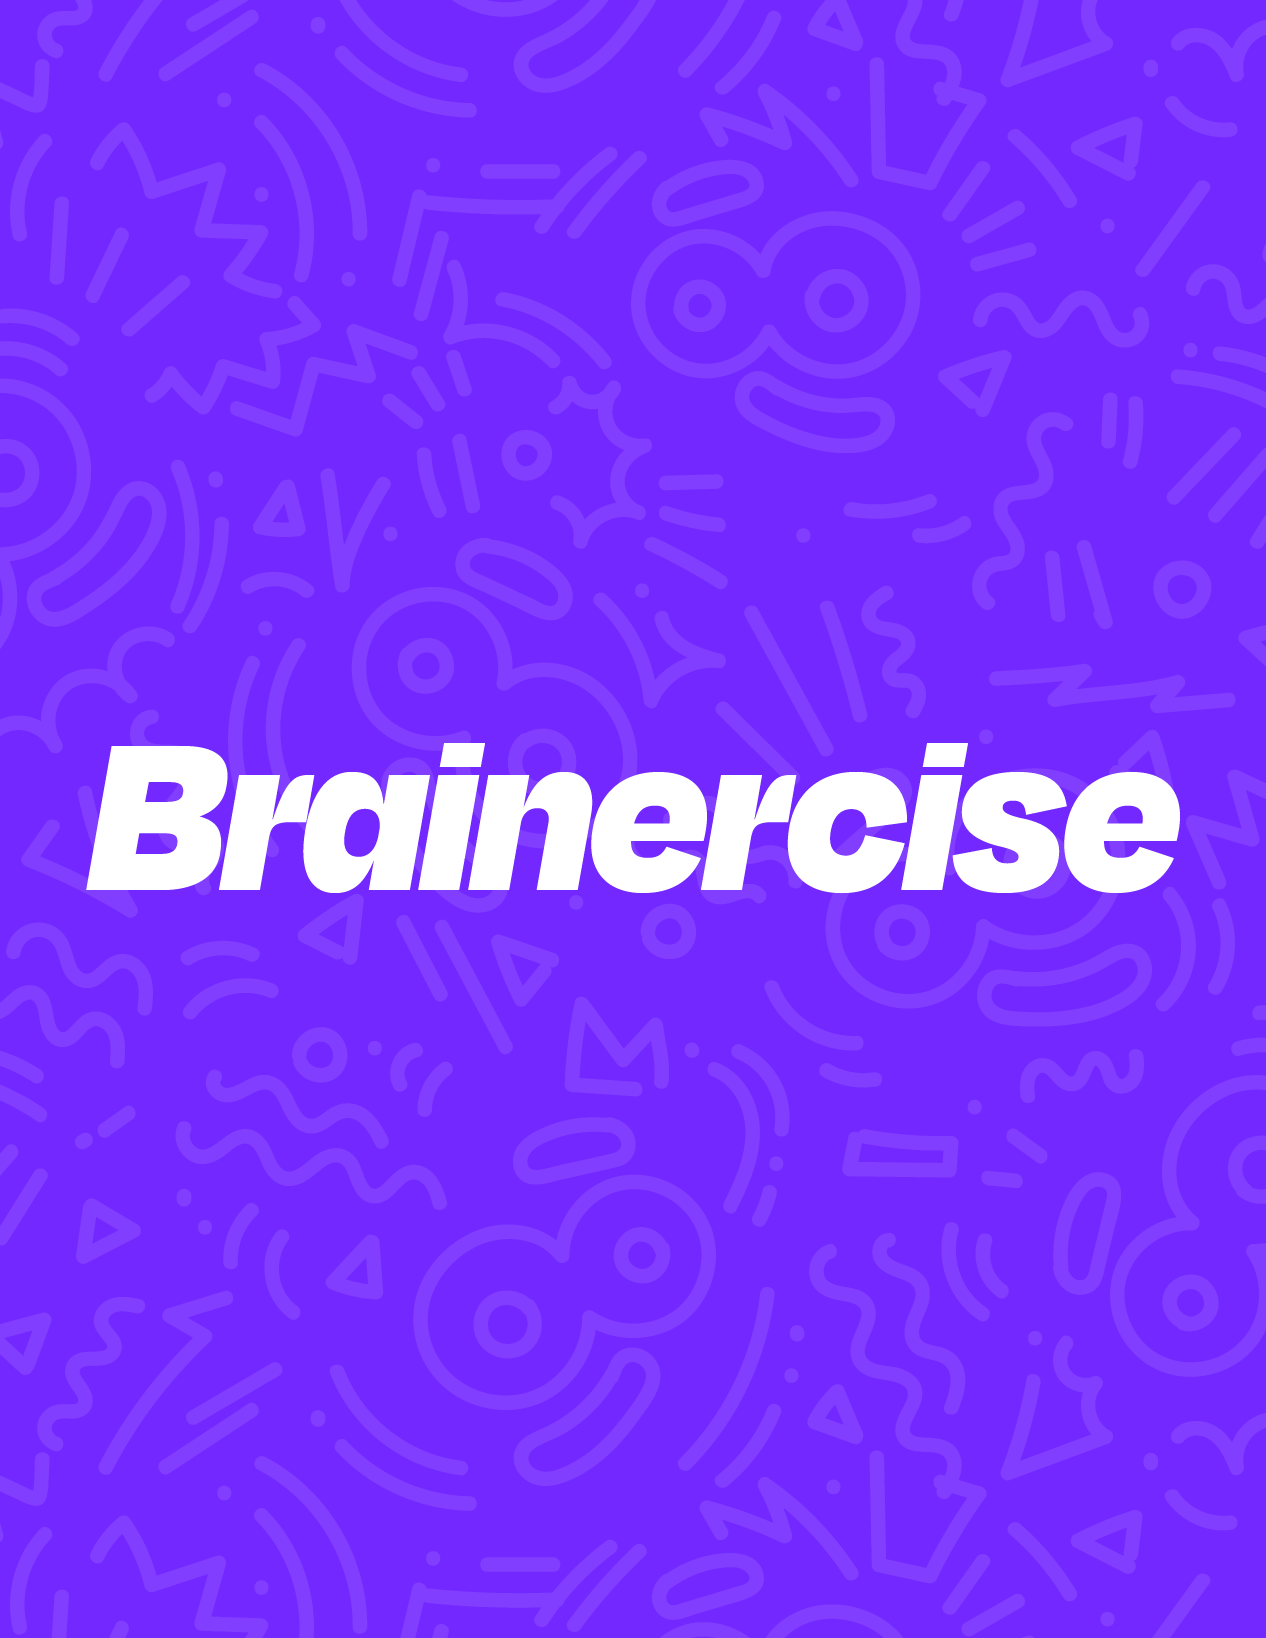 Brainercise